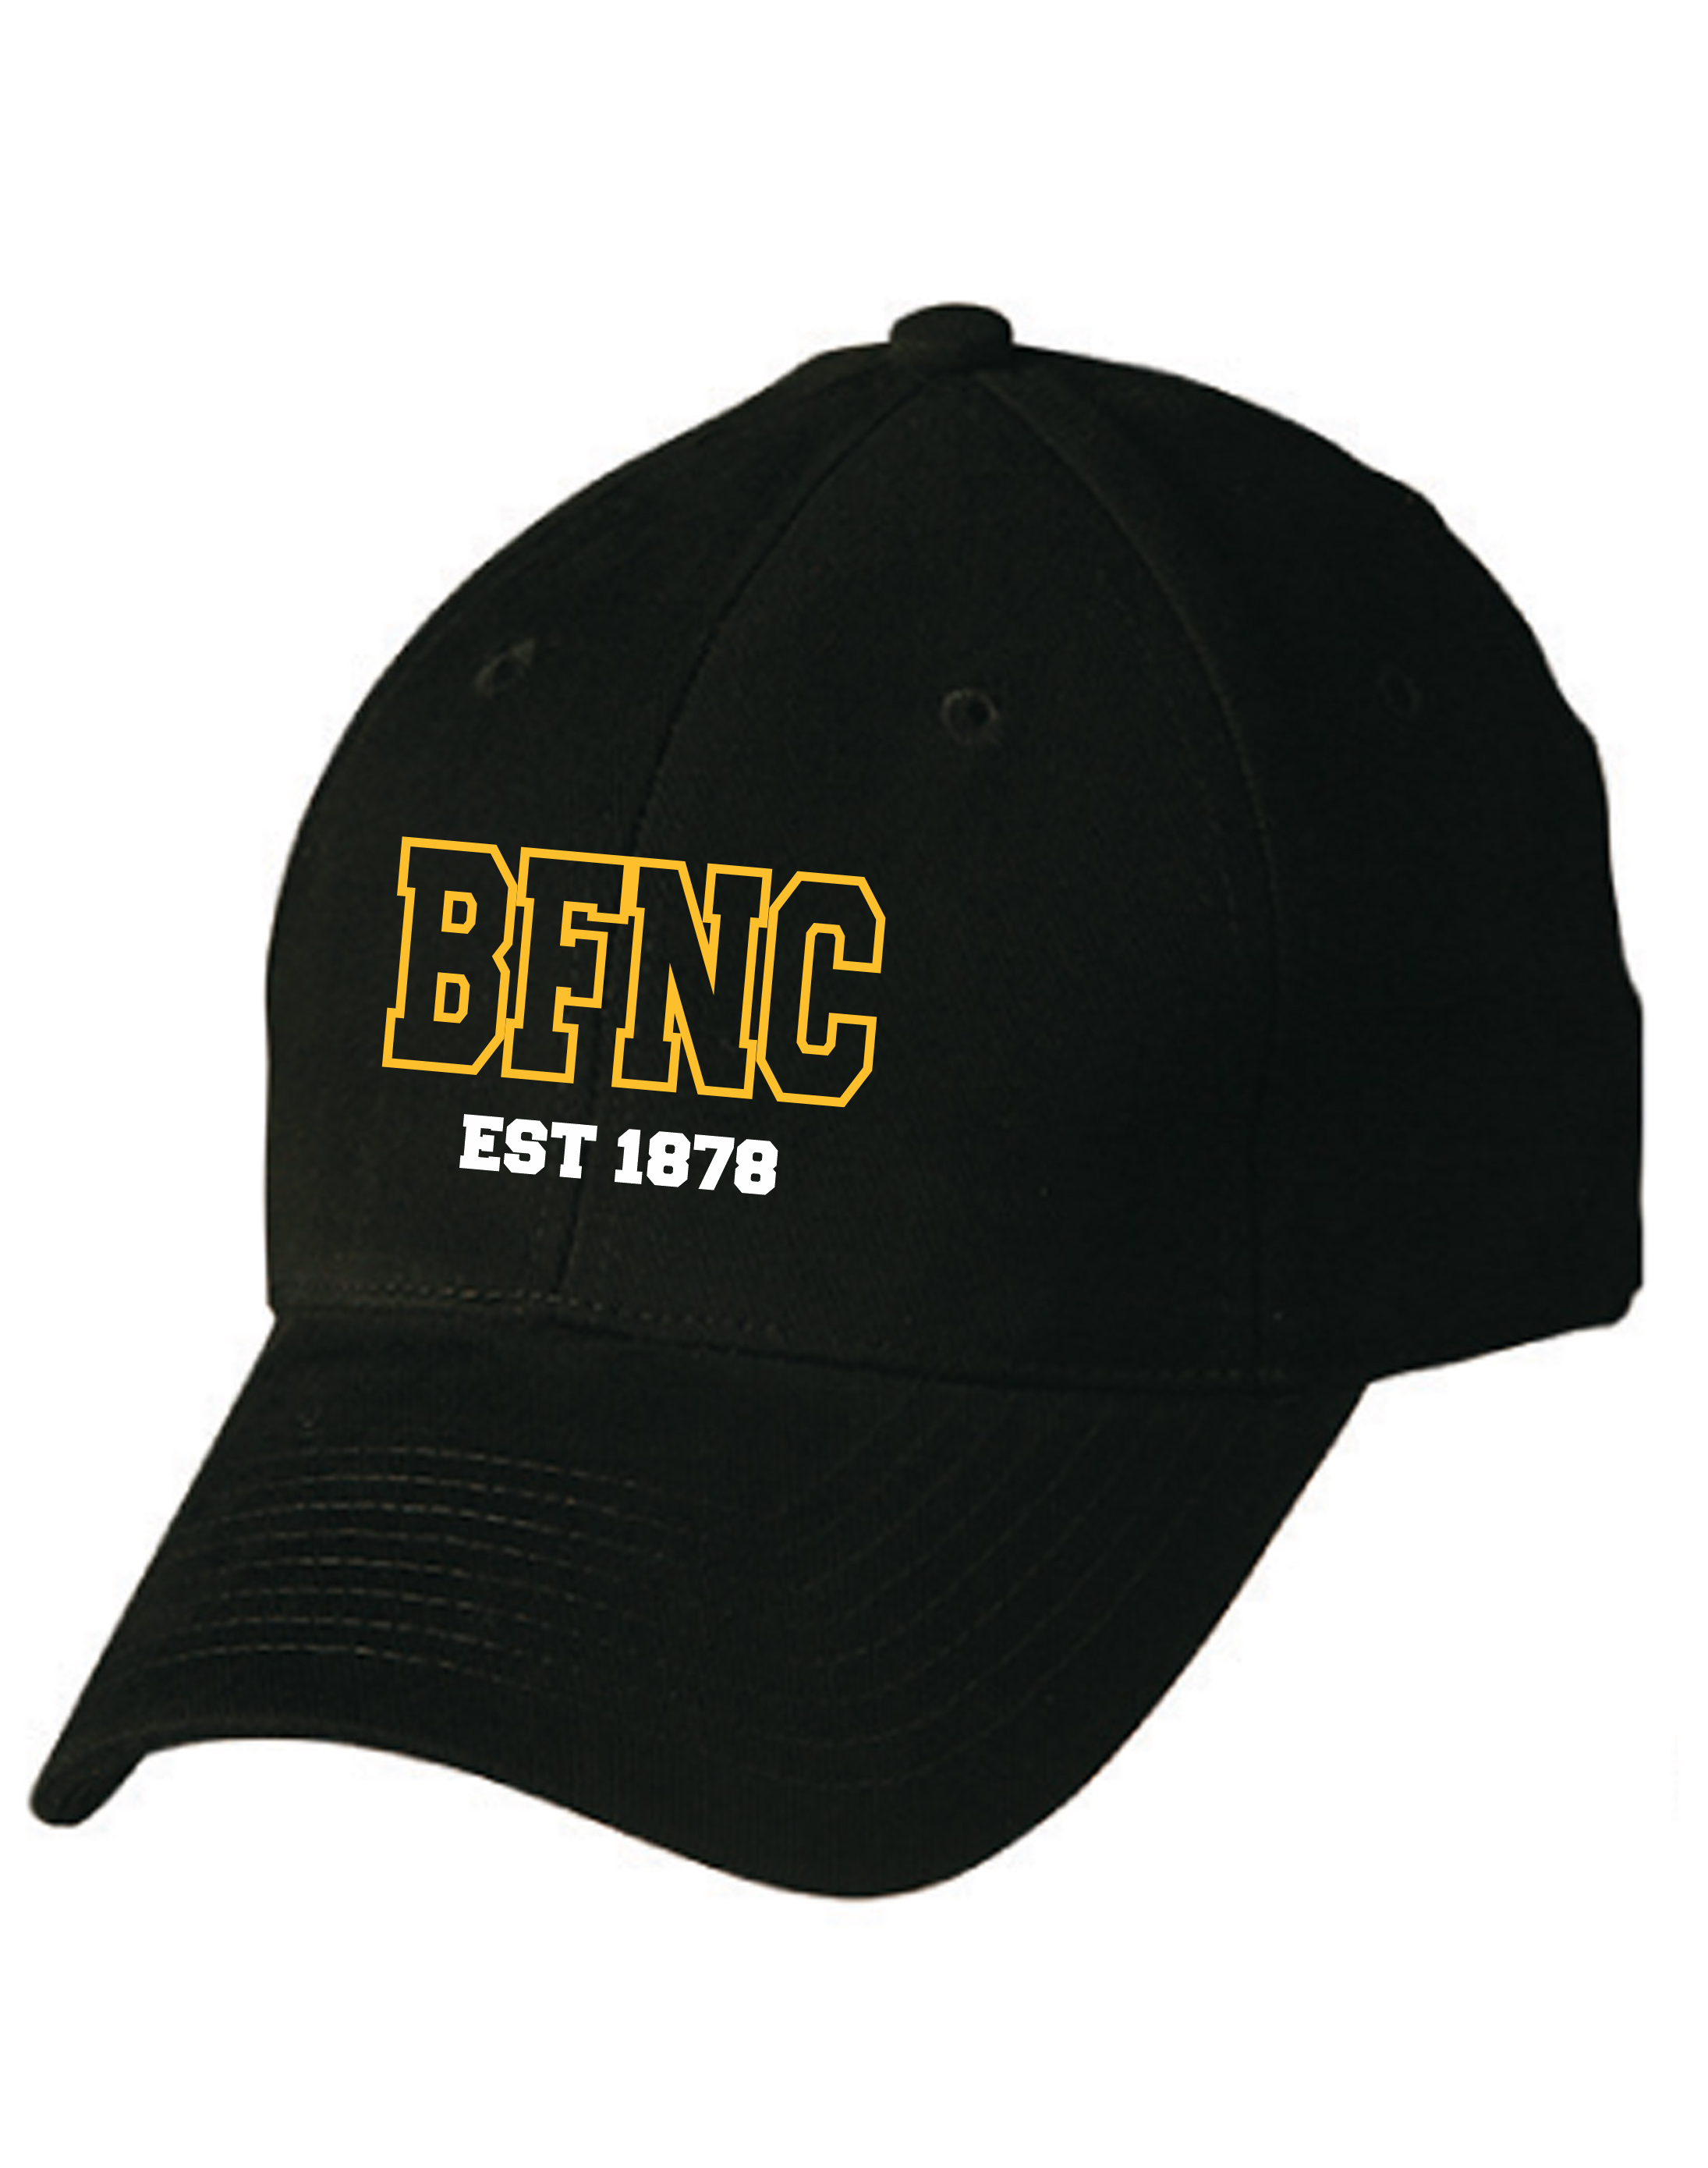 Club Cap – Black with BFNC Logo